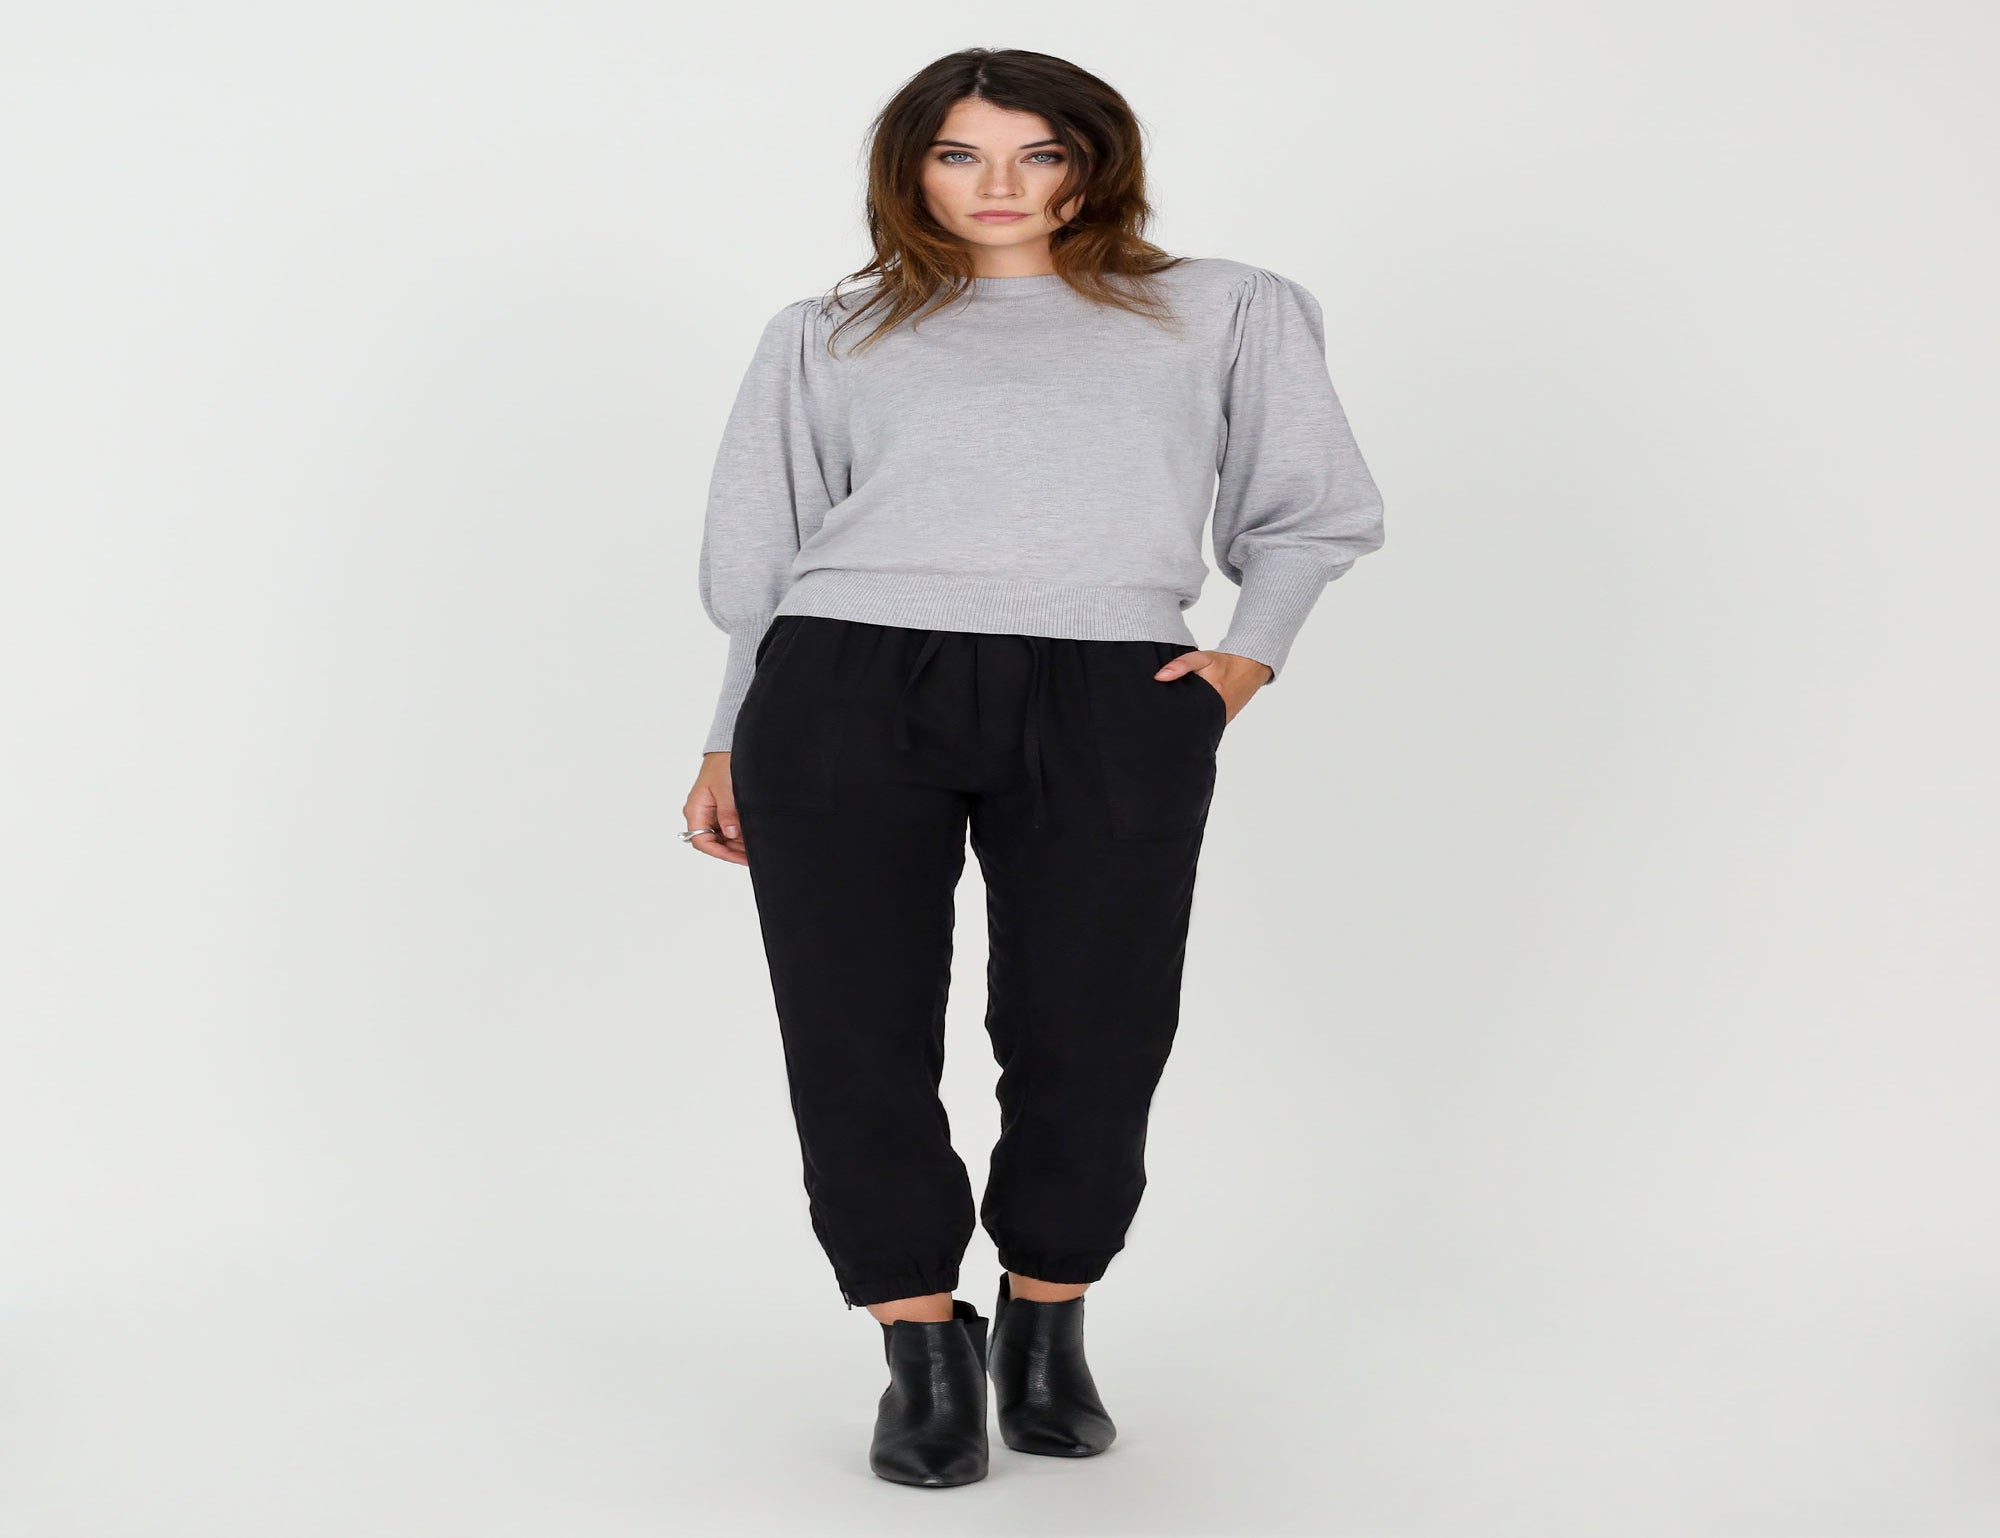 Sammy Cargo Pant - Black - Pants - Full Length - Women's Clothing - Storm